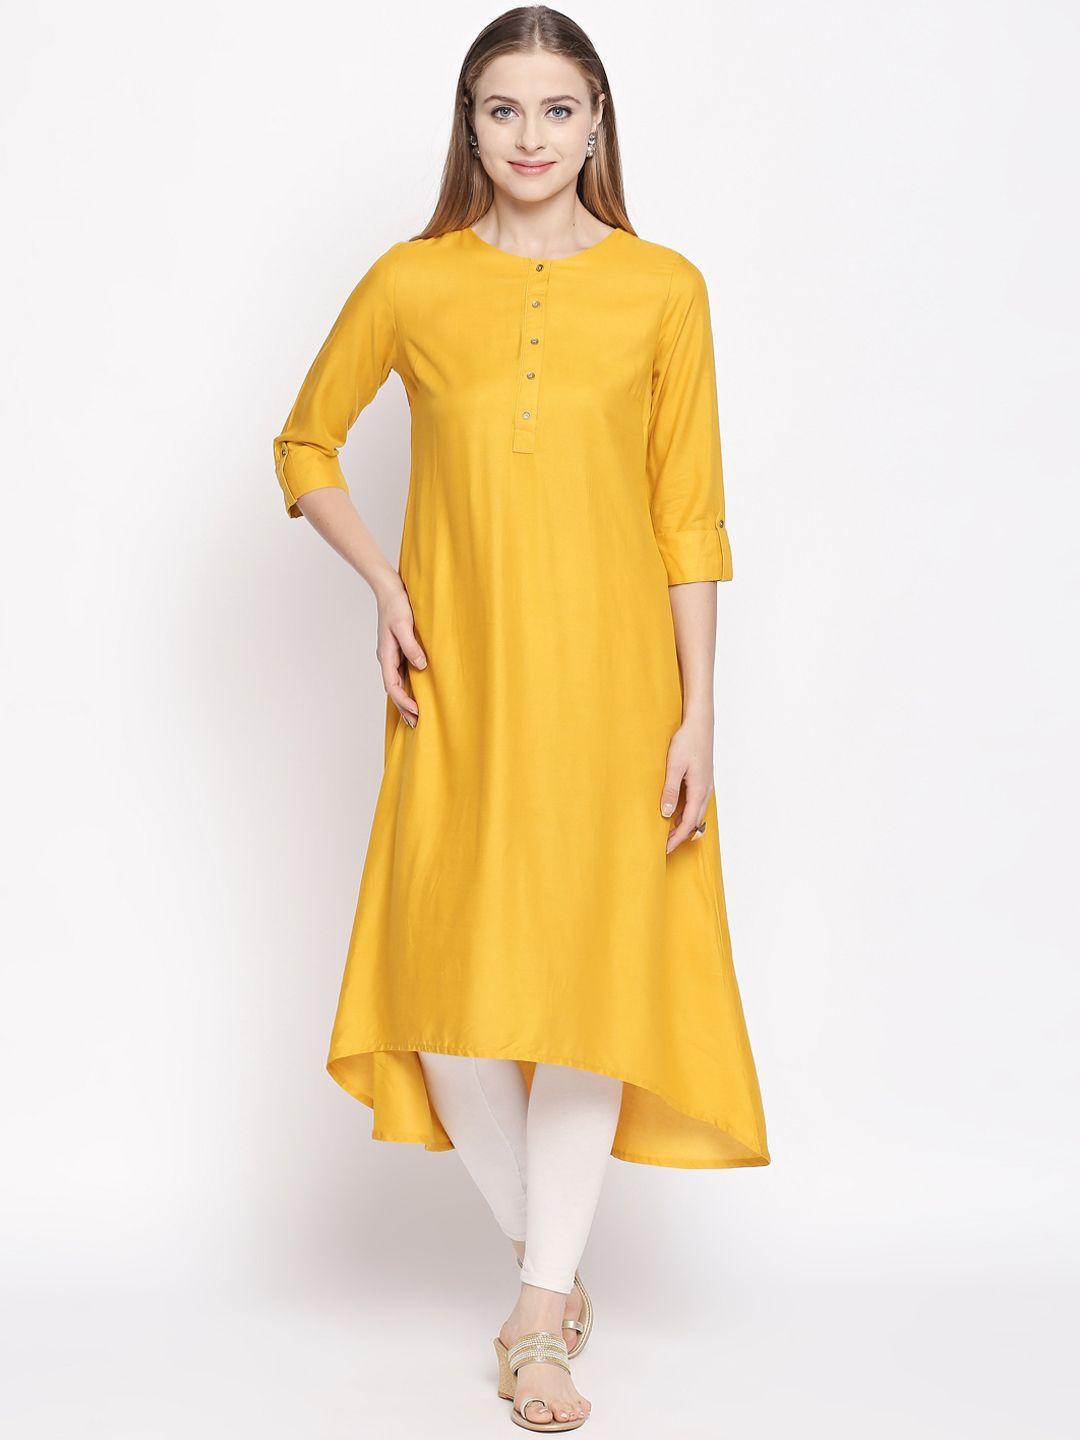 rangmanch by pantaloons women yellow solid a-line kurta